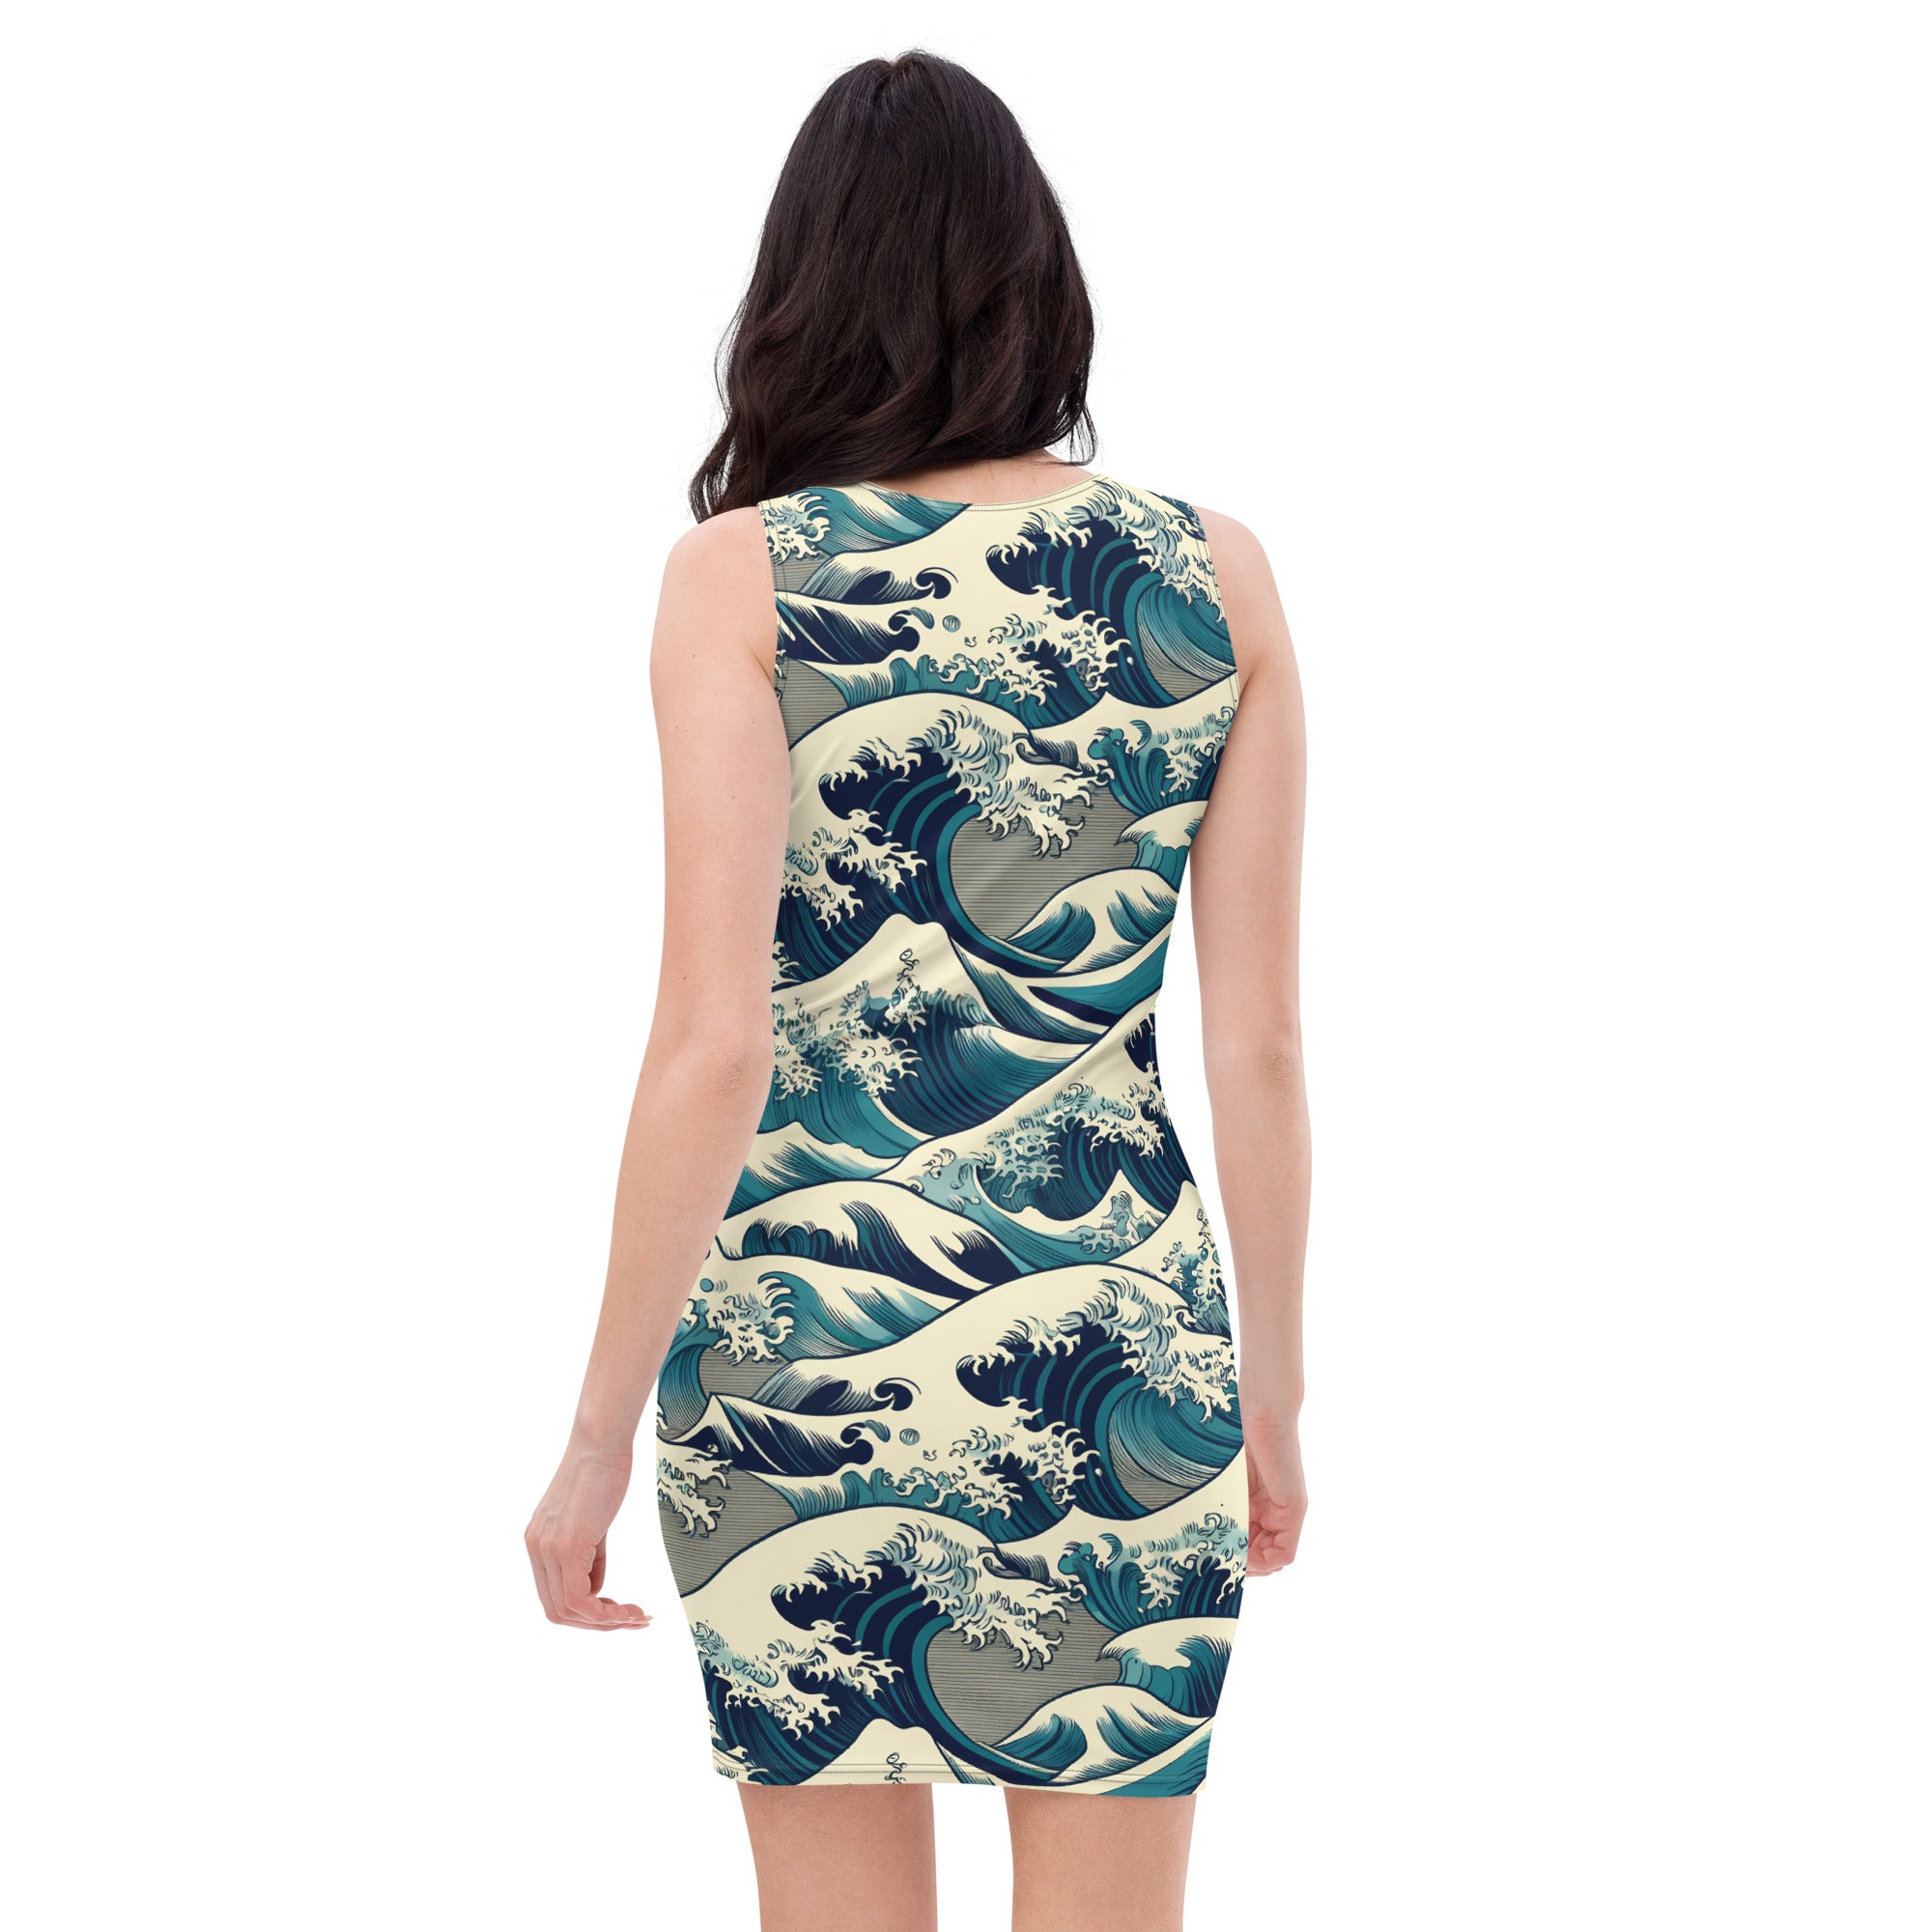 Hokusai 'The Great Wave off Kanagawa' Famous Painting Bodycon Dress | Premium Art Dress